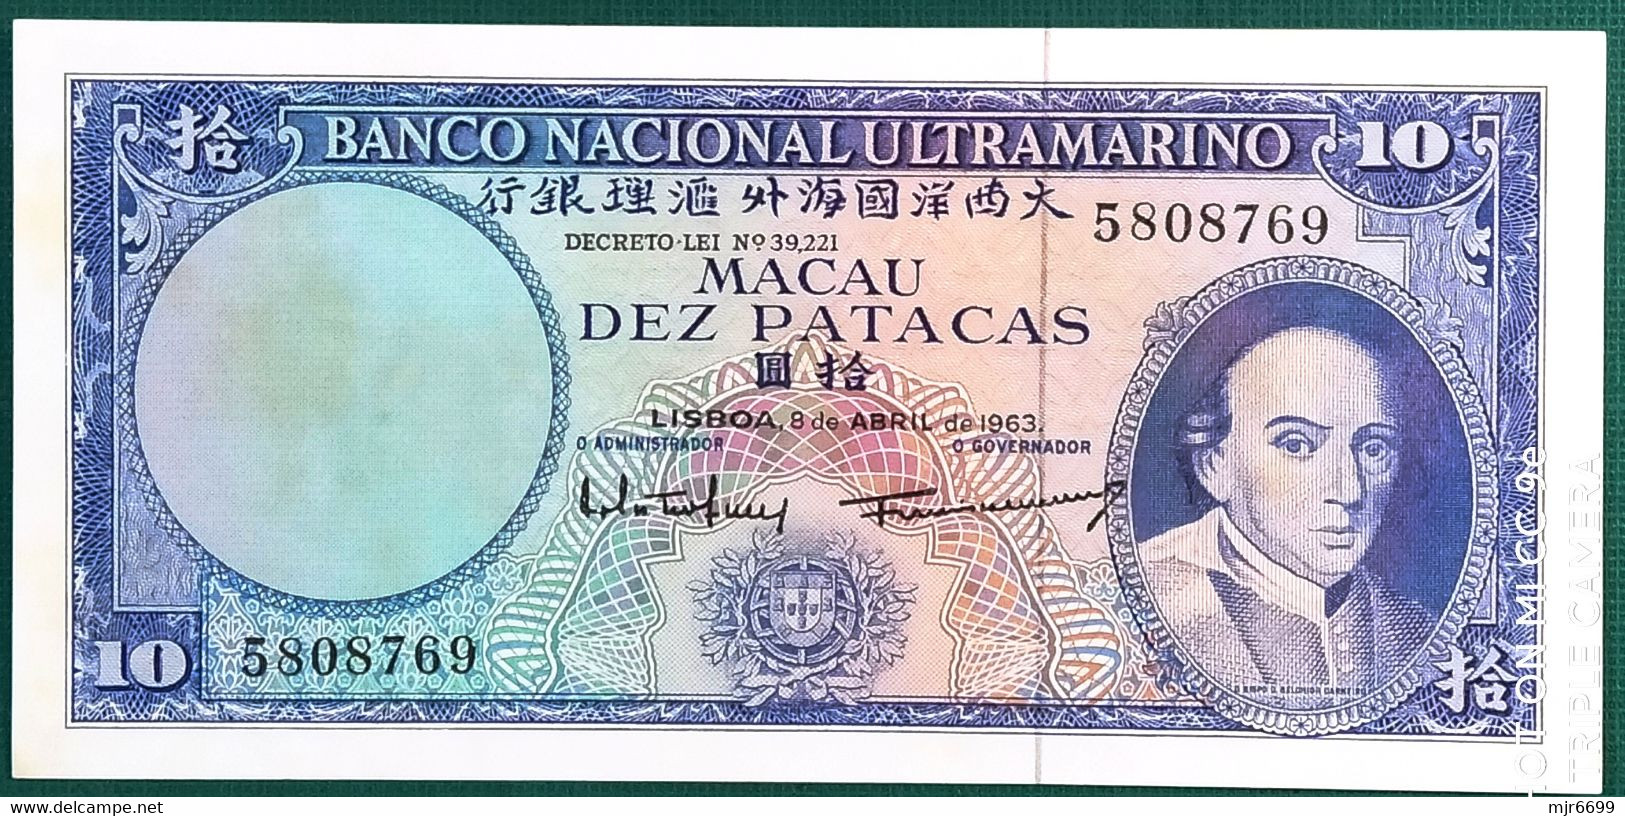 MACAU 1963 BANK NOTE 10 PATACAS UNCIRCULATED BUT TONING ON BACK, SEE PHOTO - Macau